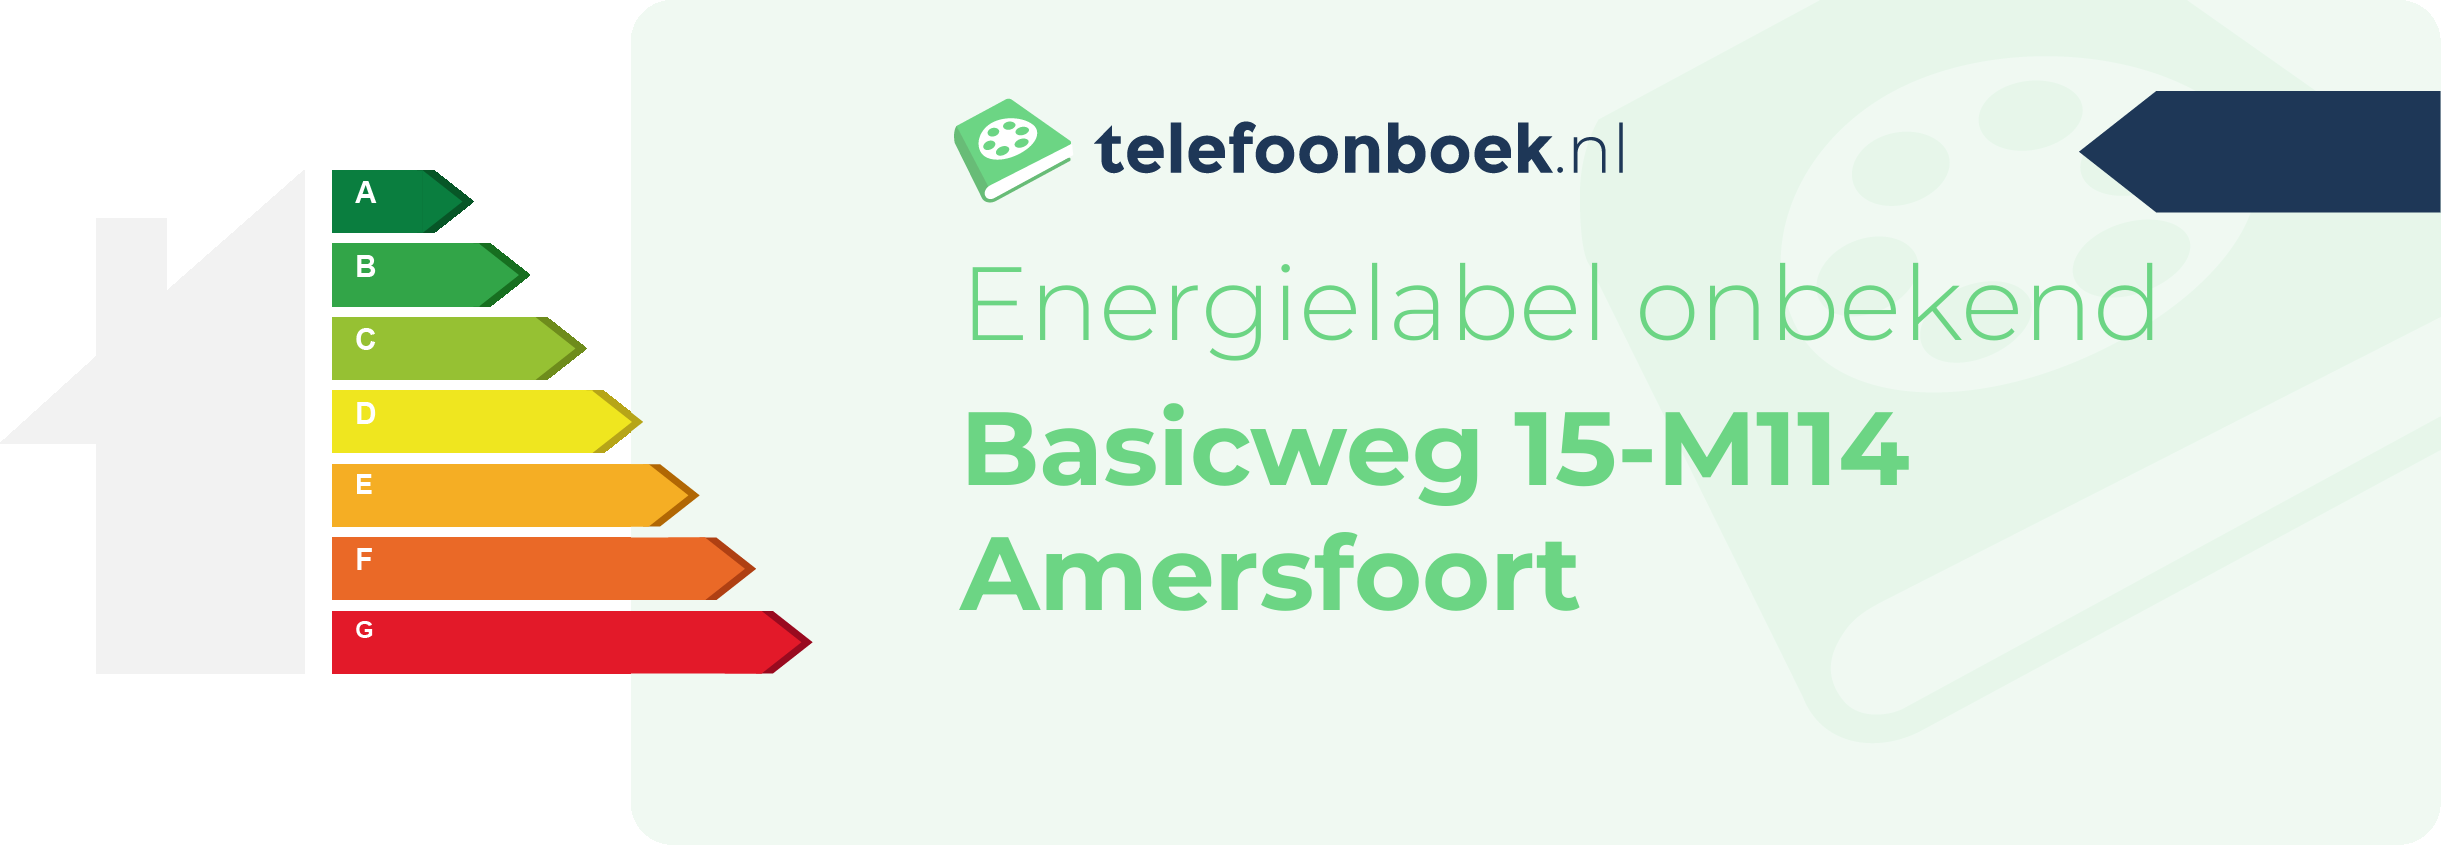 Energielabel Basicweg 15-M114 Amersfoort